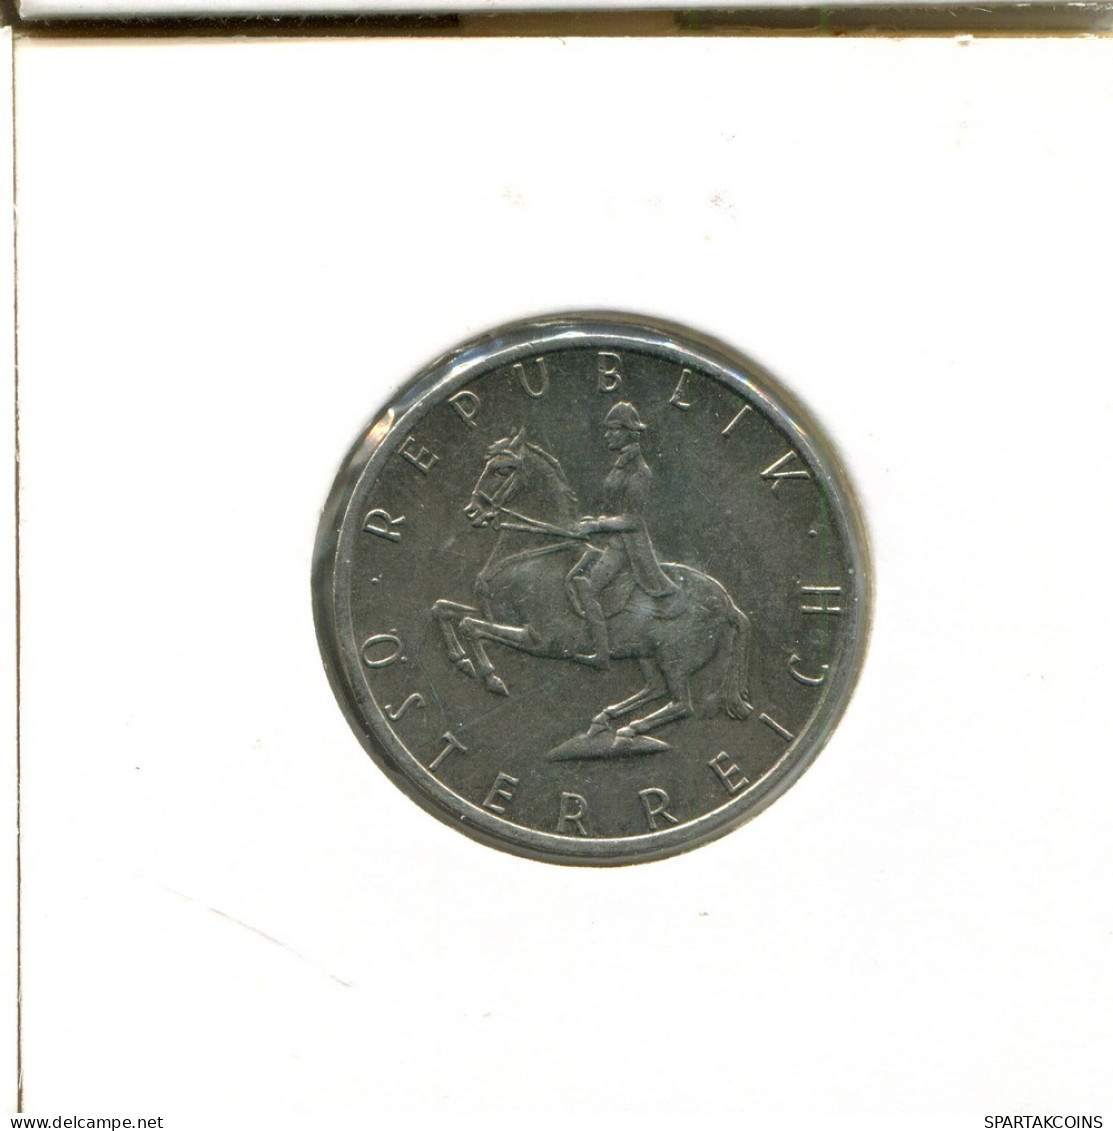 5 SCHILLING 1986 AUSTRIA Coin #AT672.U.A - Autriche